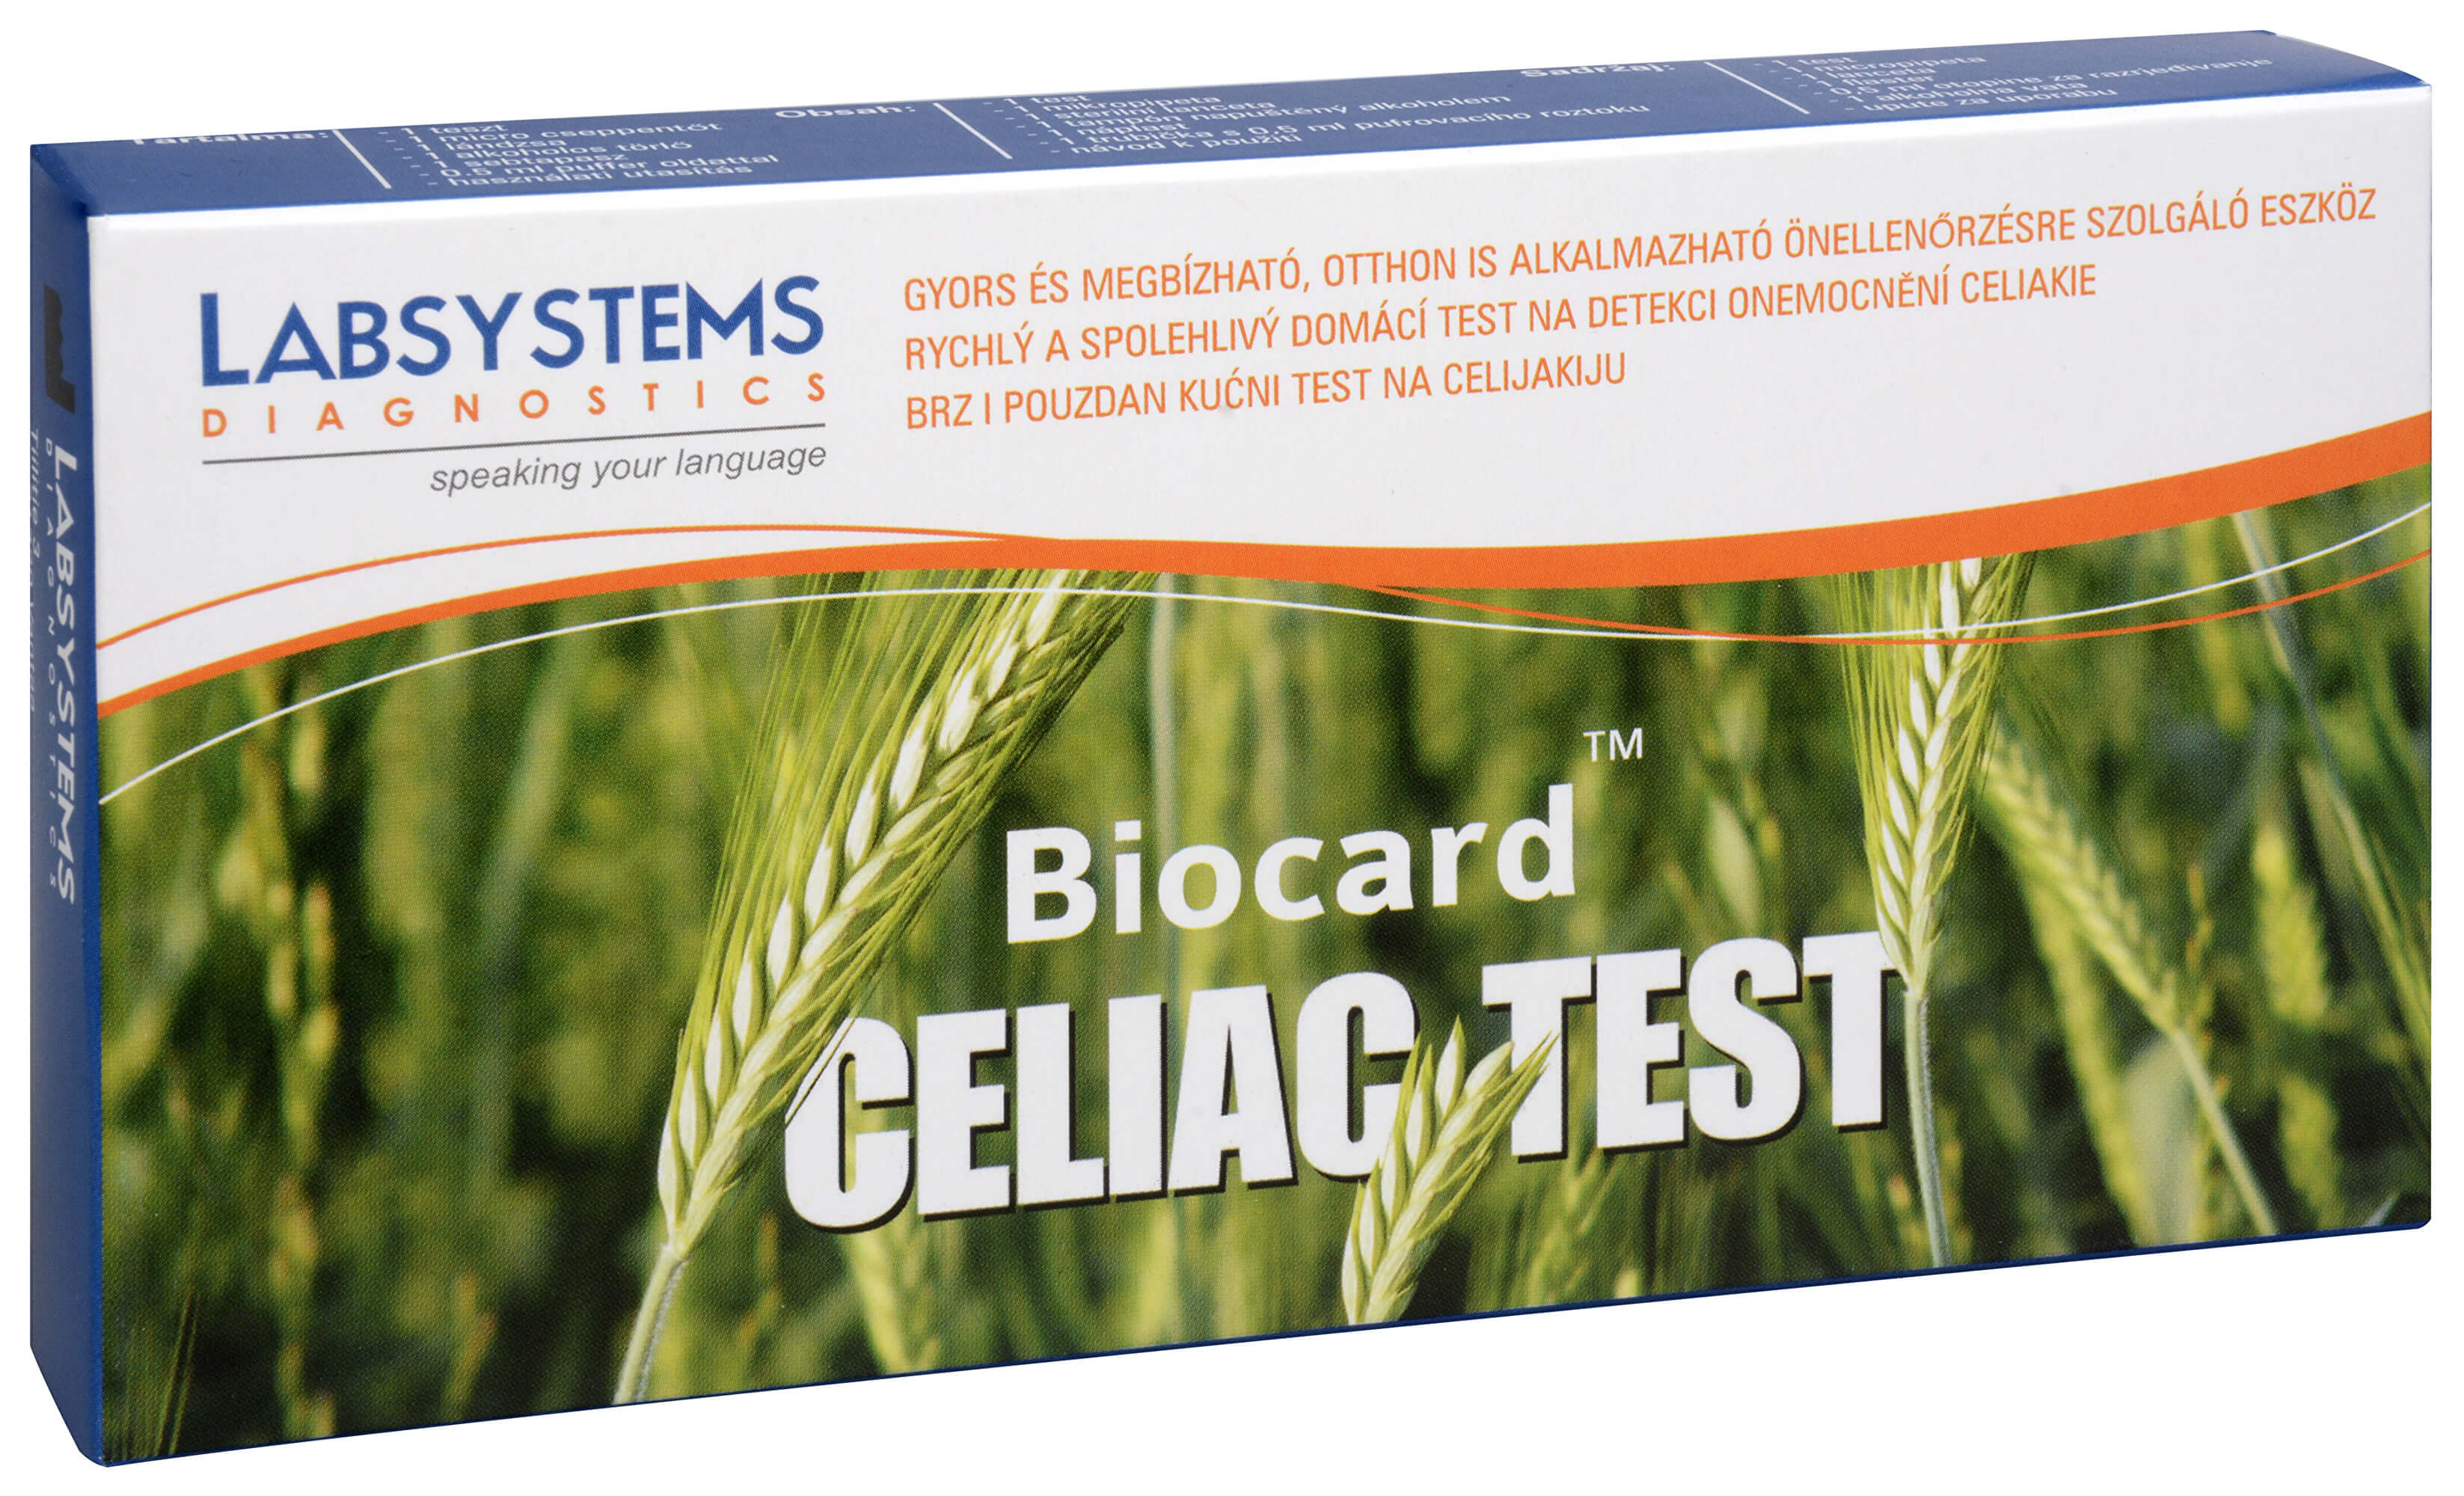 Berosa Biocard Celiac test 1 ks